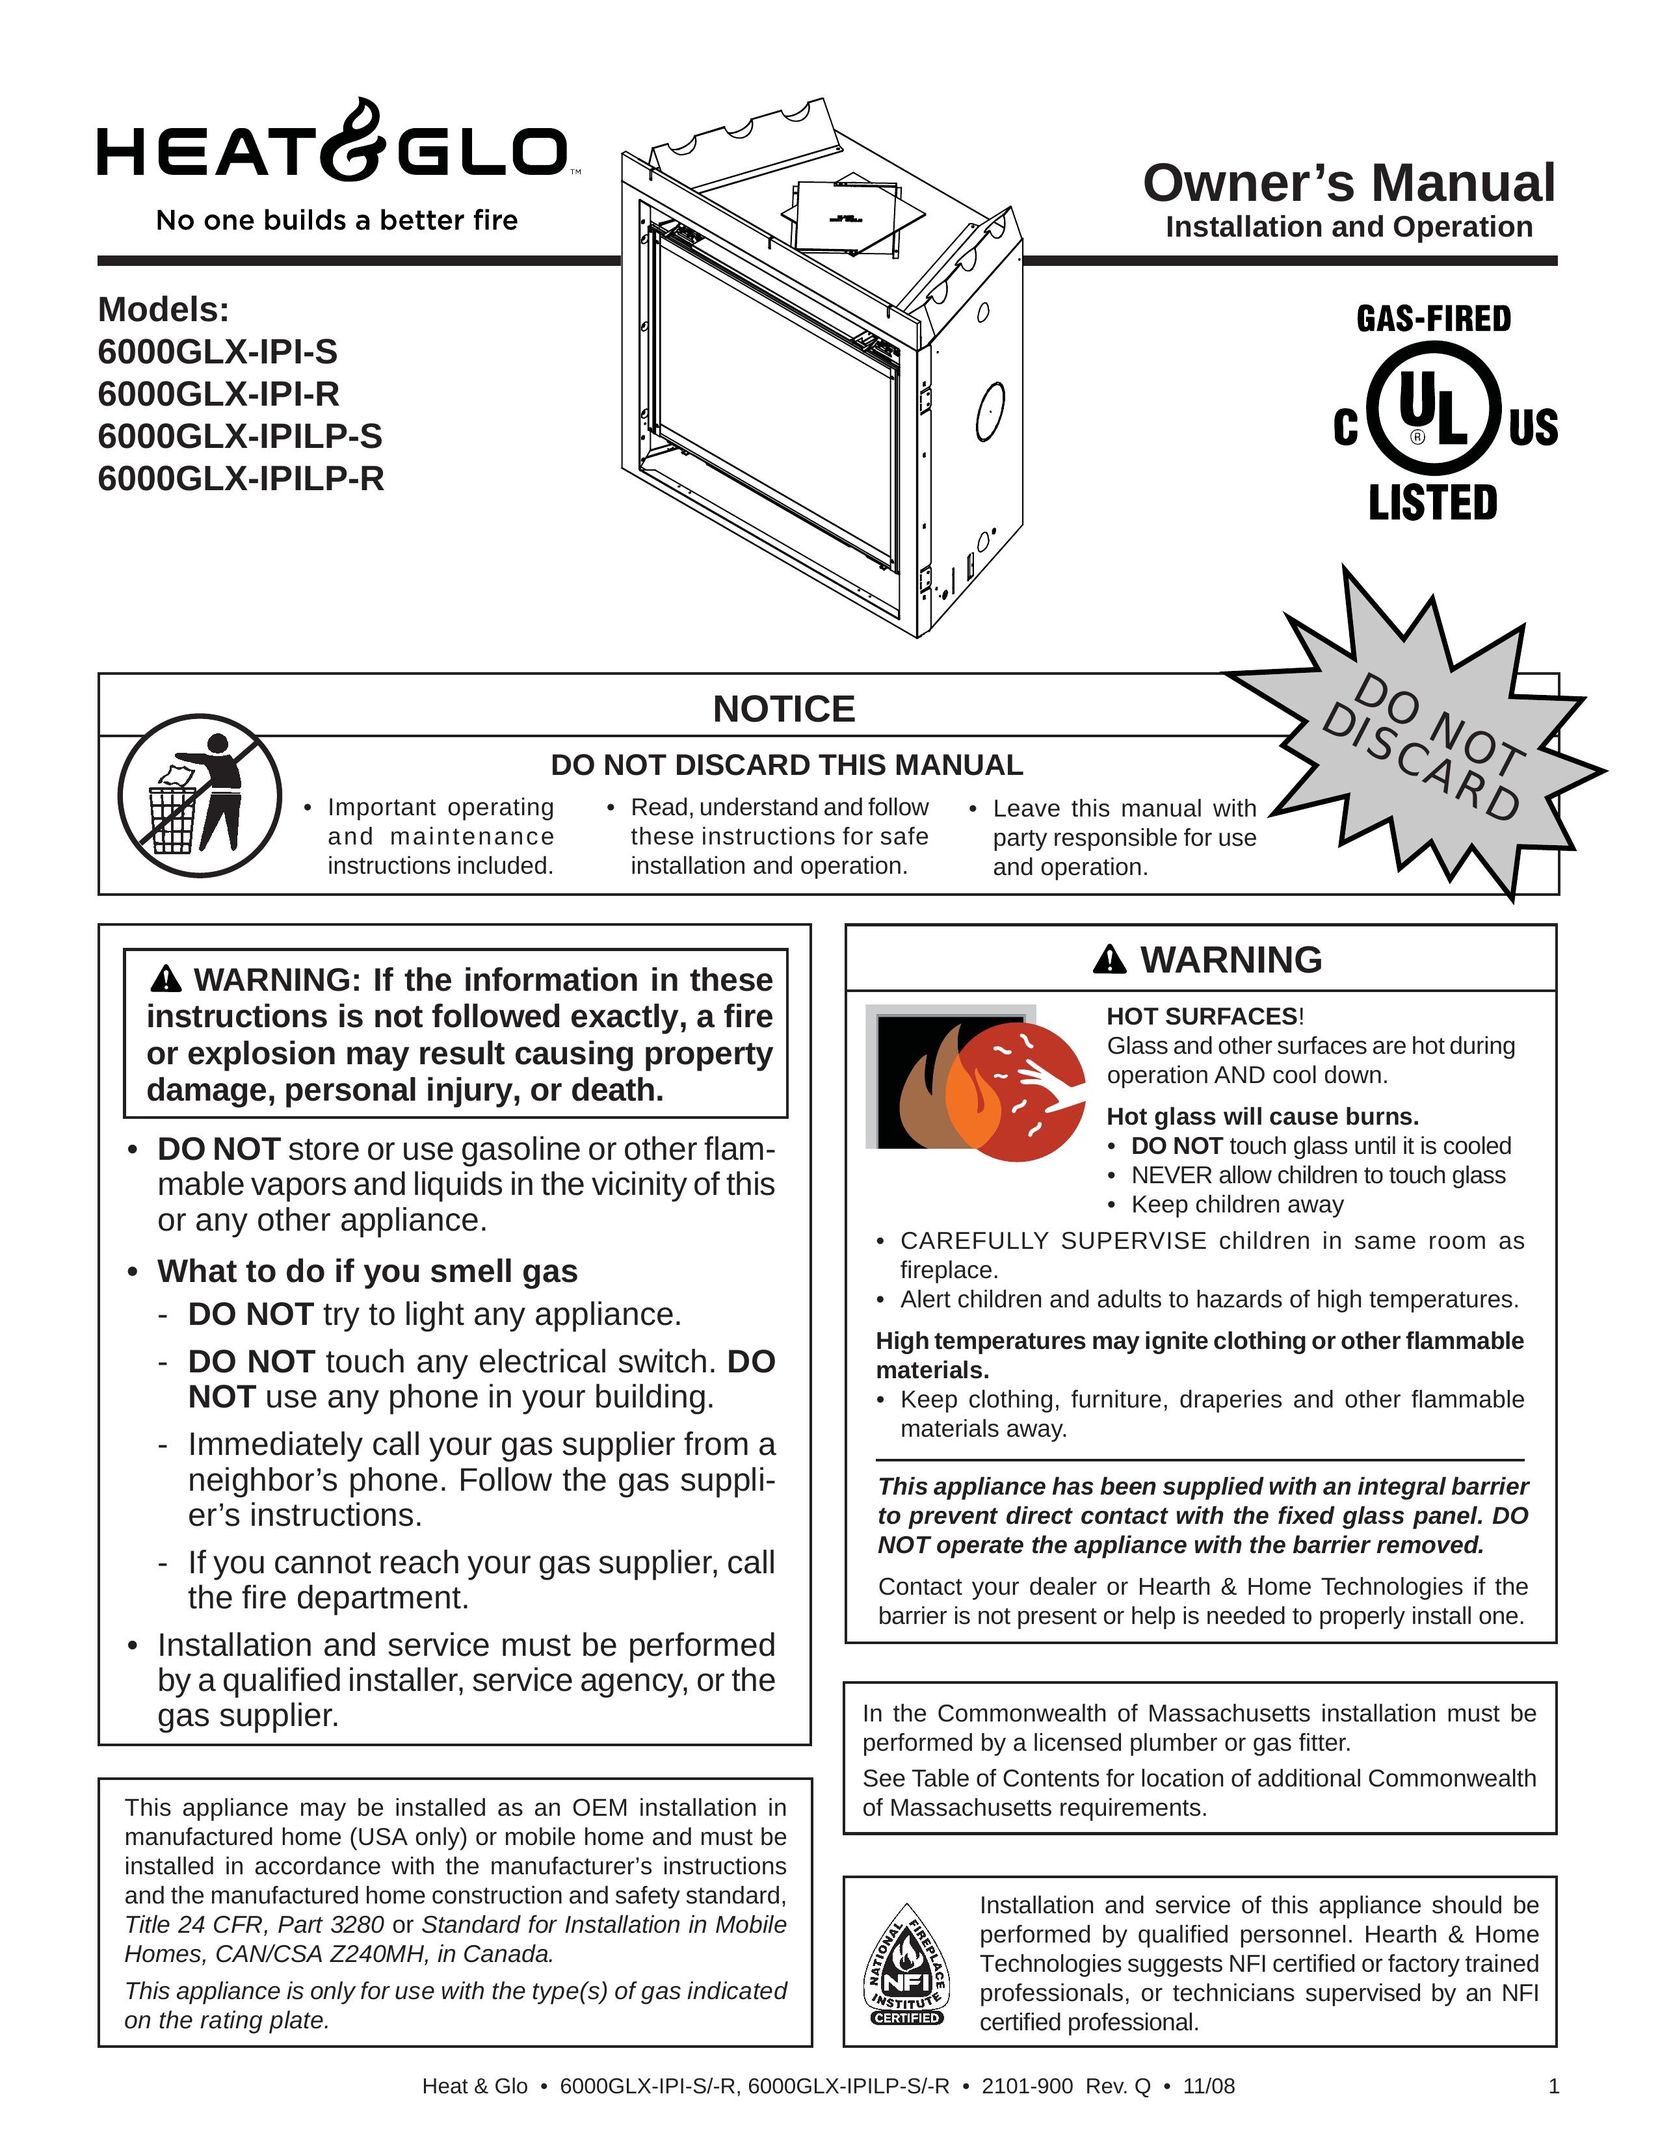 Heat & Glo LifeStyle 6000GLX-IPI-S/-R Indoor Fireplace User Manual